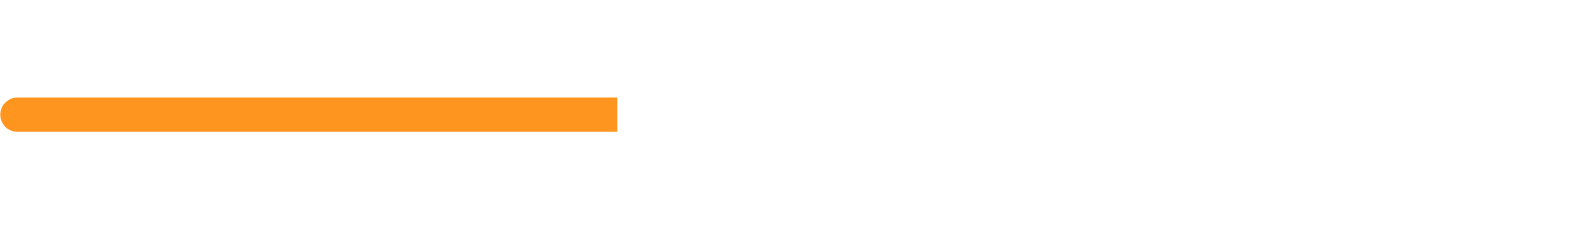 EnBW Energie Logo groß für dunkle Hintergründe (transparentes PNG)